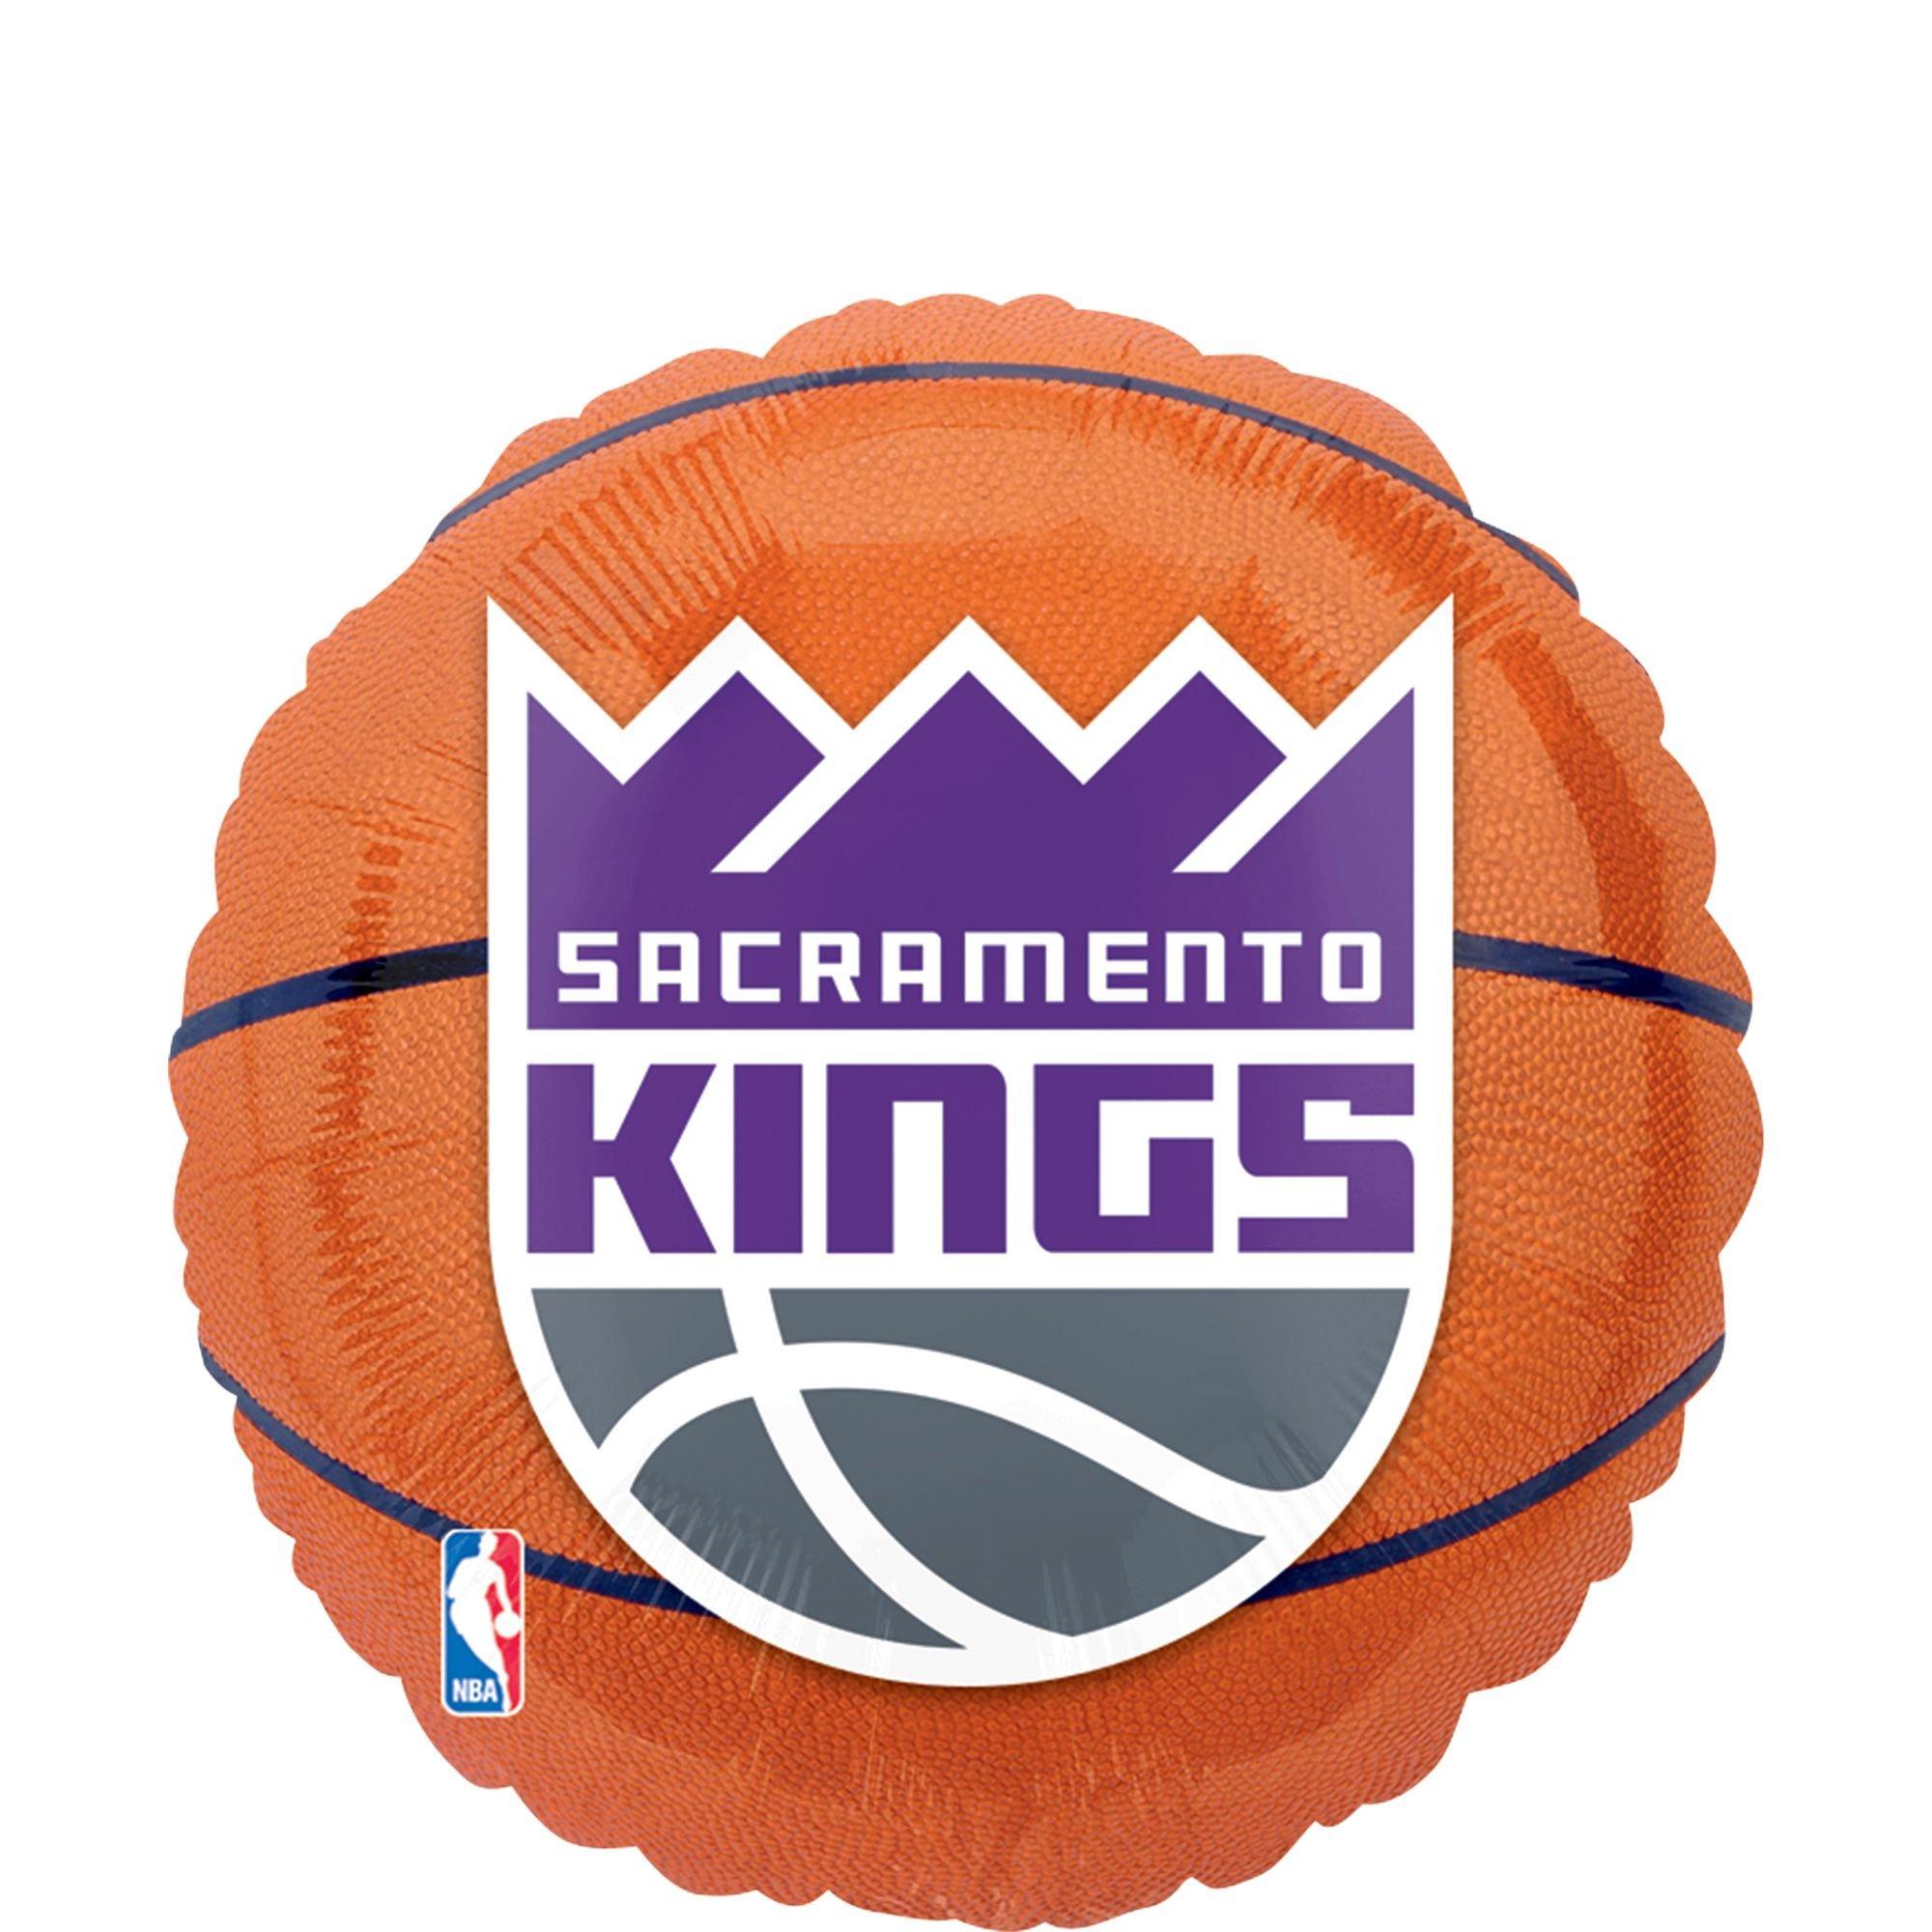 The Sacramento Kings are Back, Baby